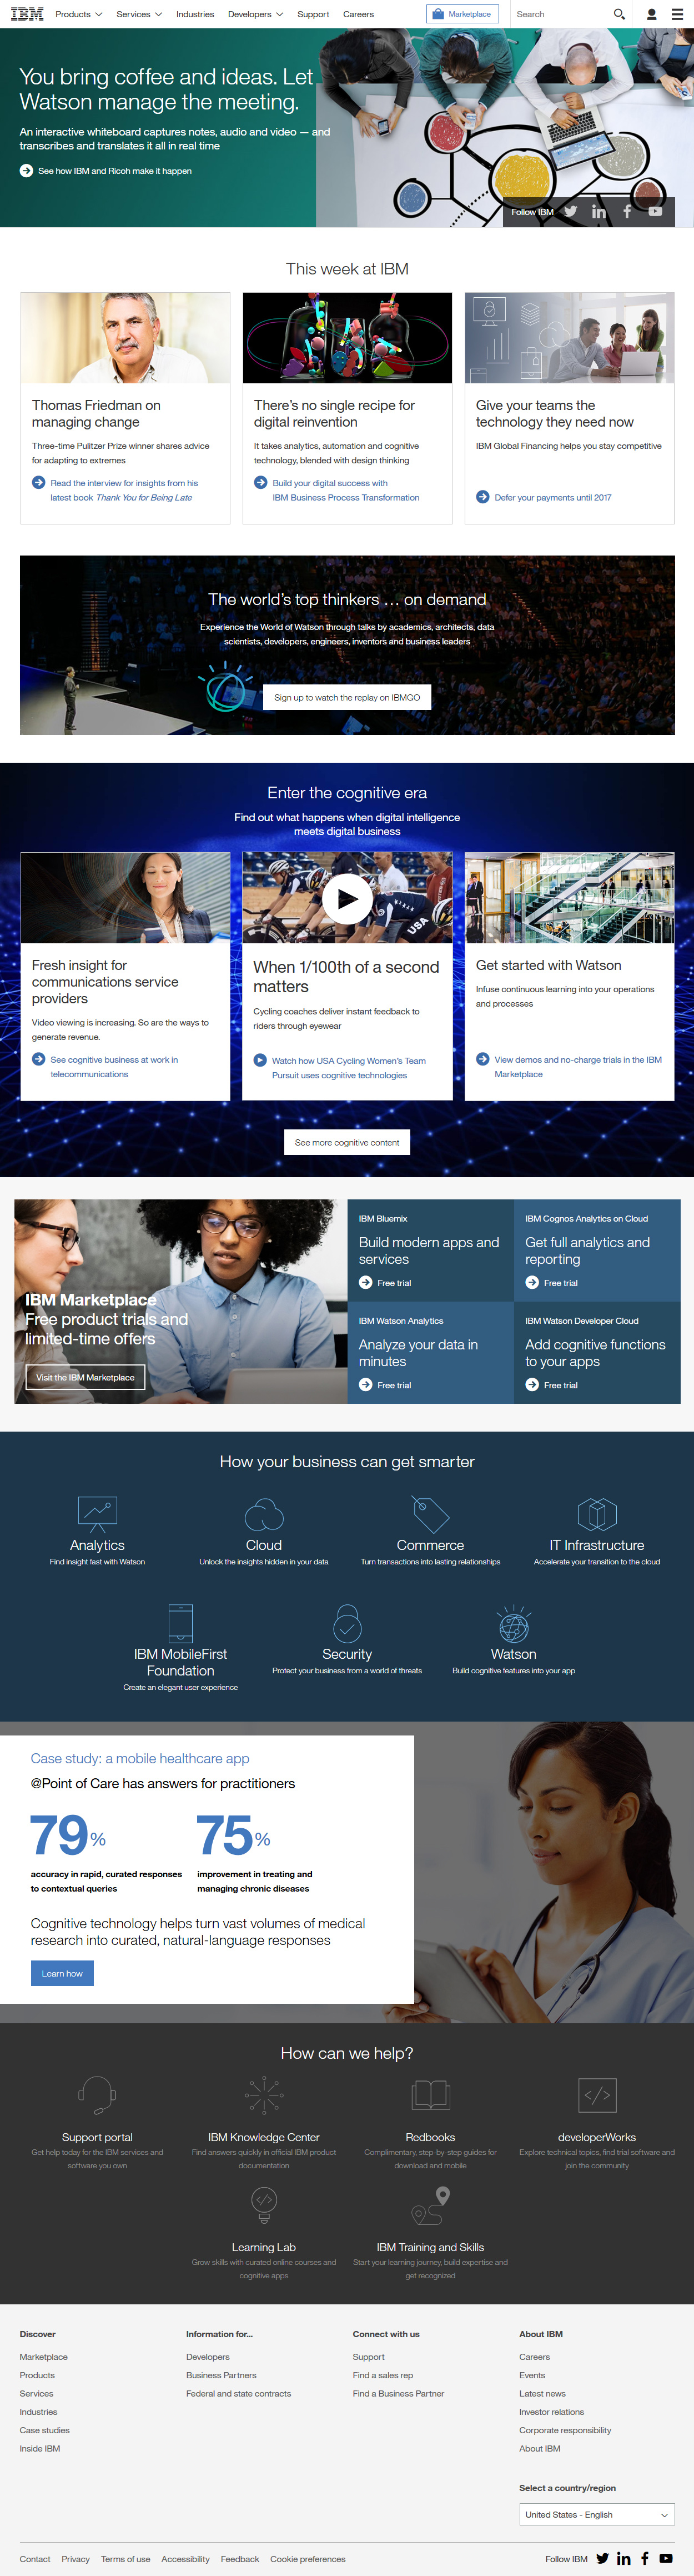 IBM website in 2016